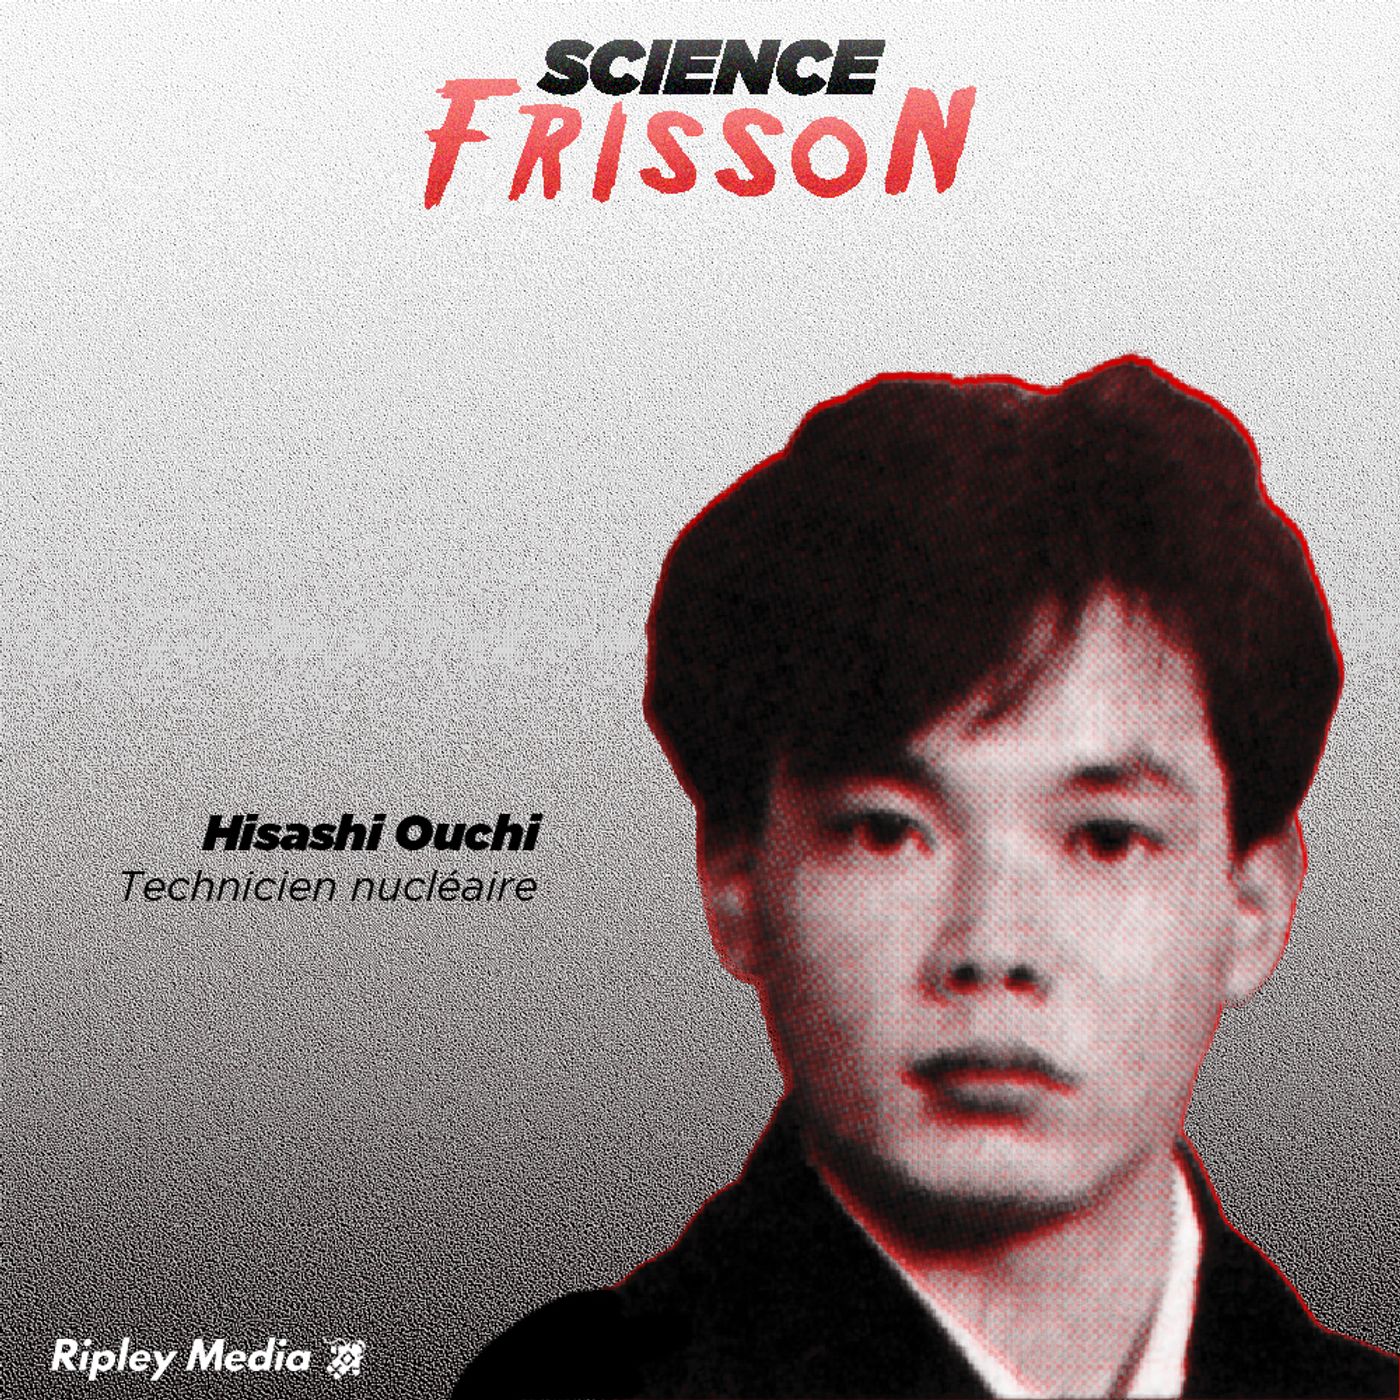 Hisashi Ouchi: Earth’s Most Radioactive Man